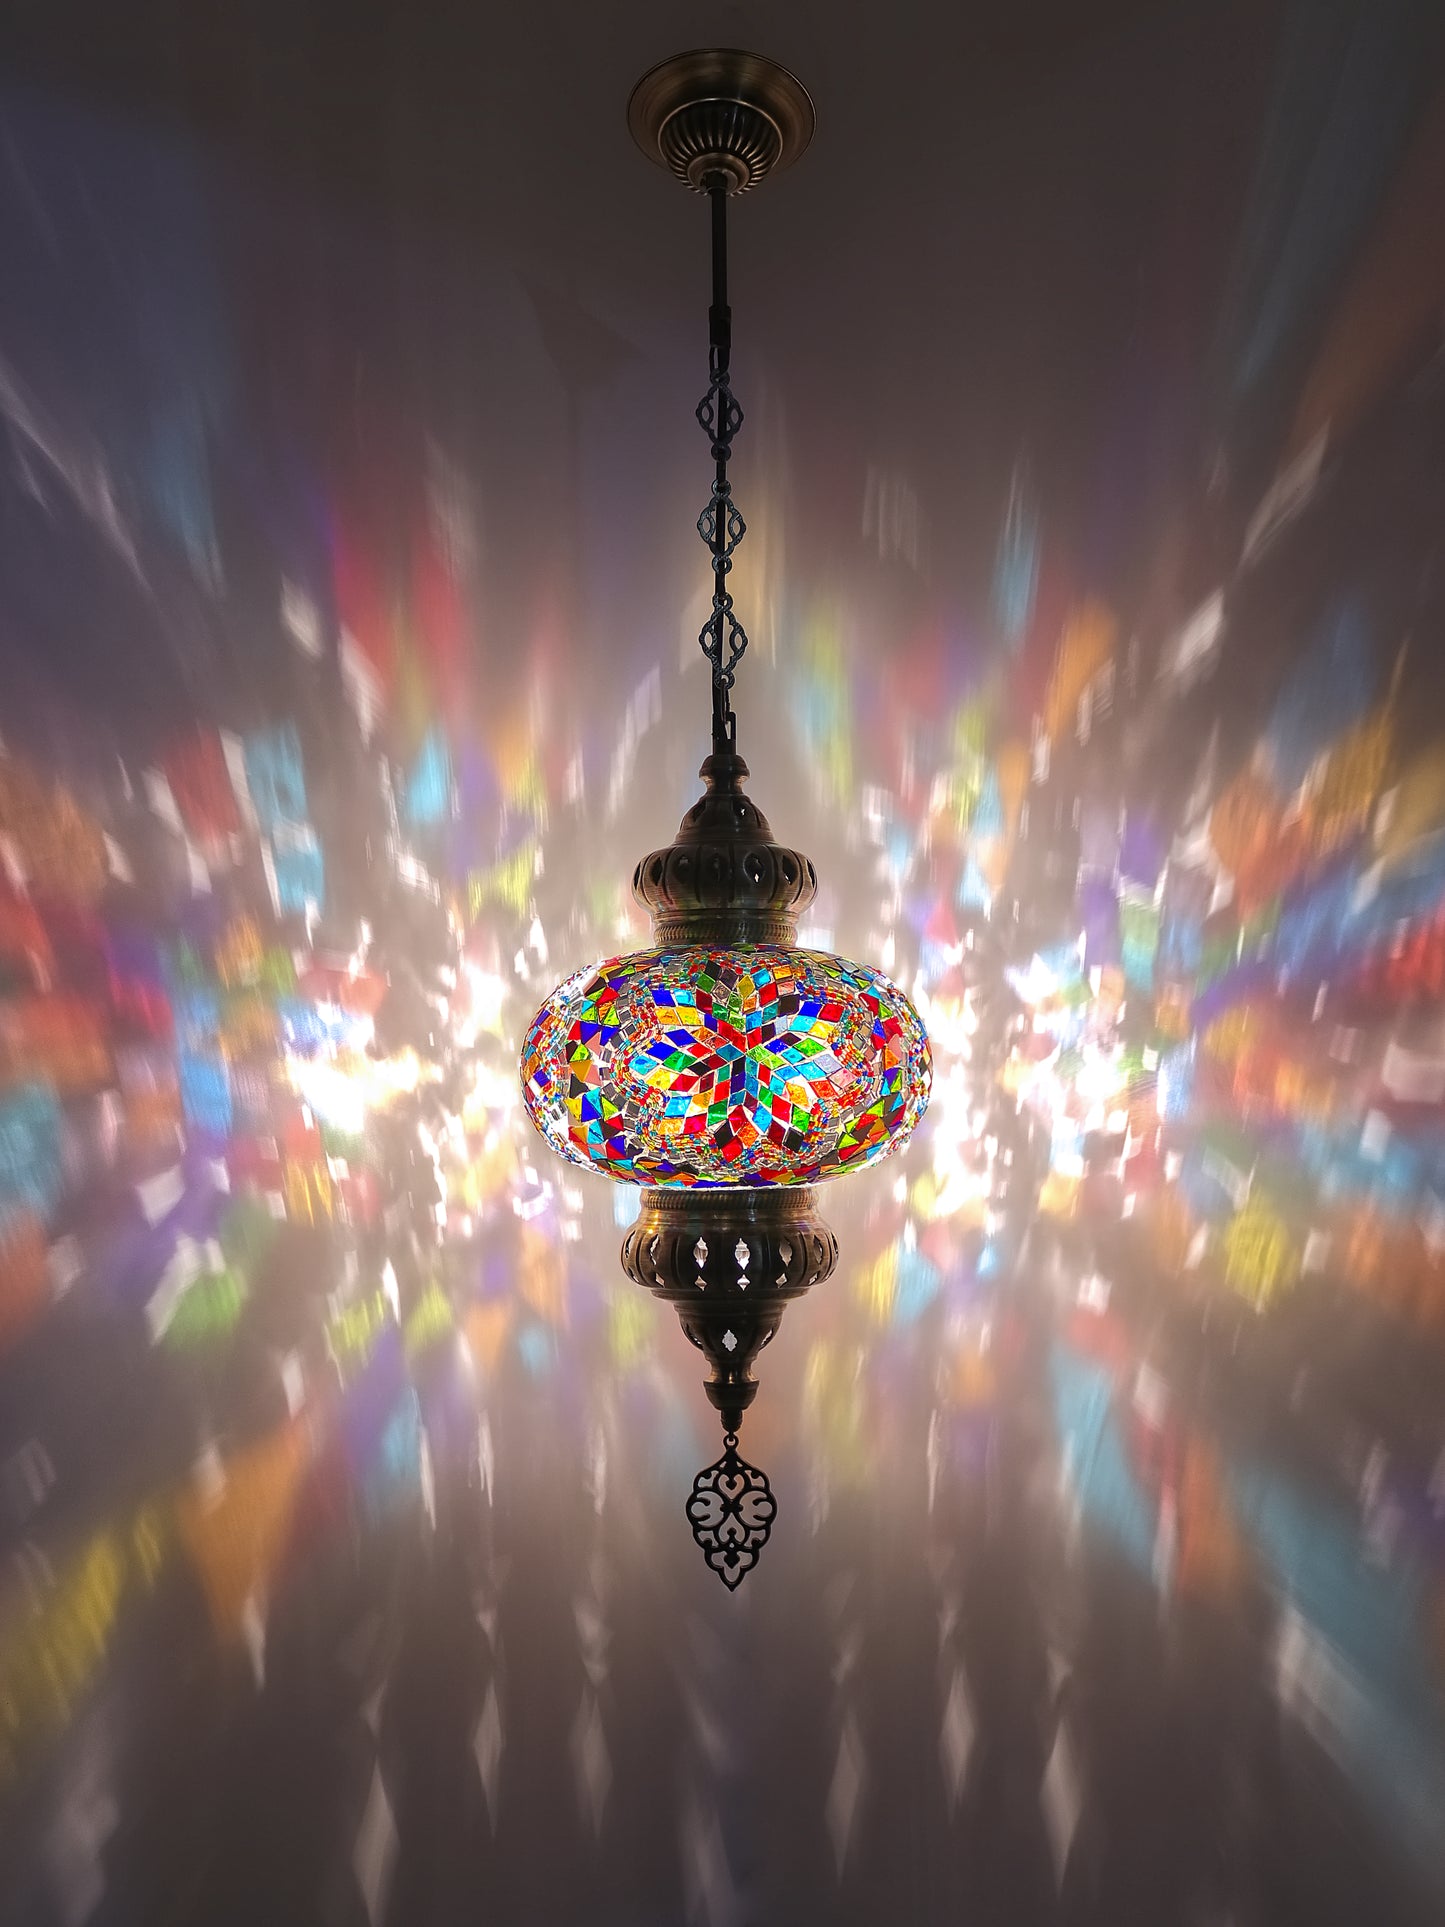 Turkish Mosaic Pendant Lighting 9,84 Inch Diameter